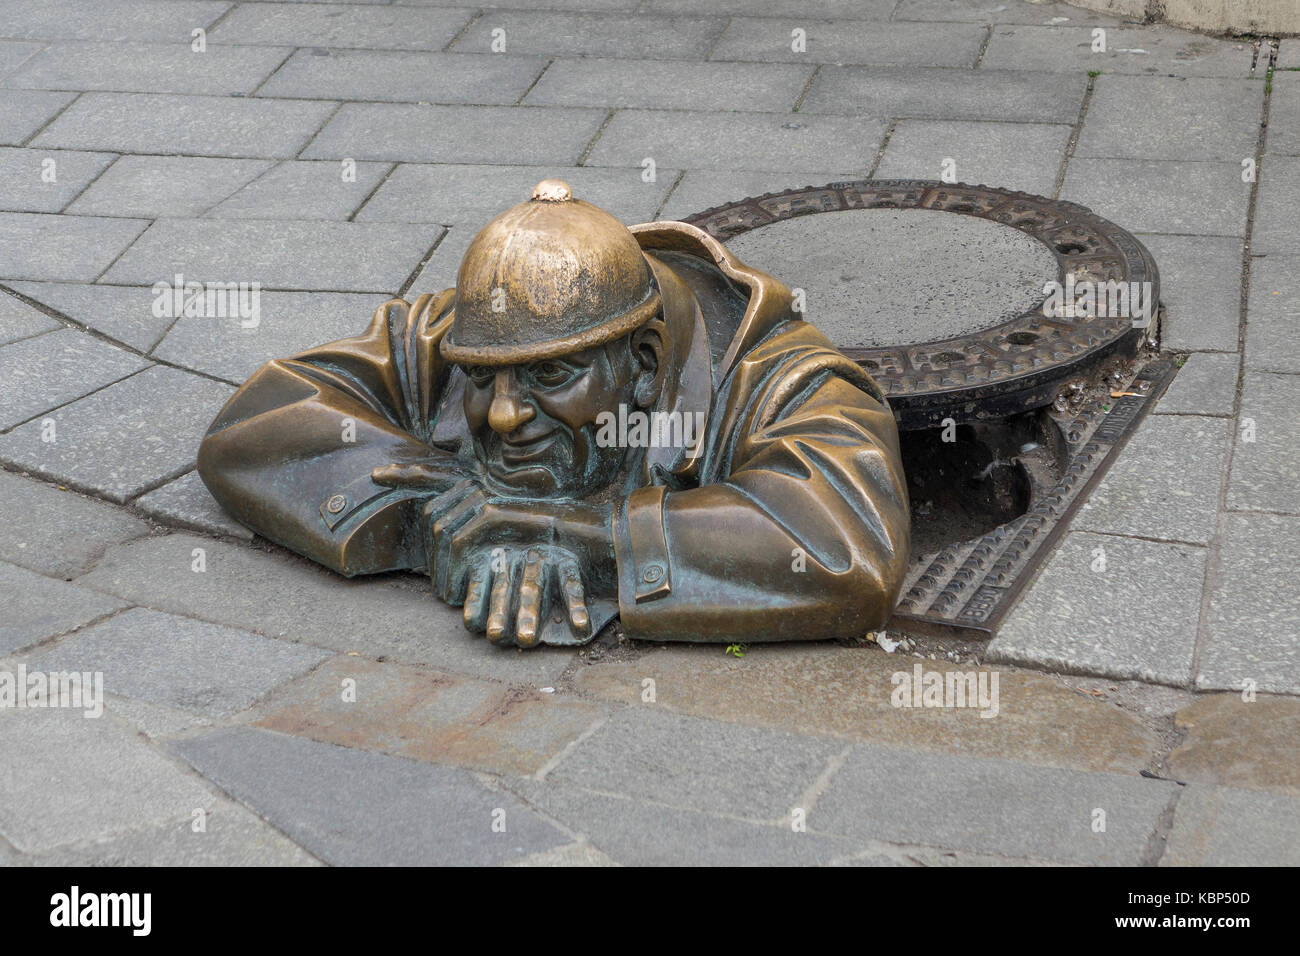 Eslovaquia, Bratislava, la estatua del hombre emergiendo desde la calle alcantarilla Foto de stock